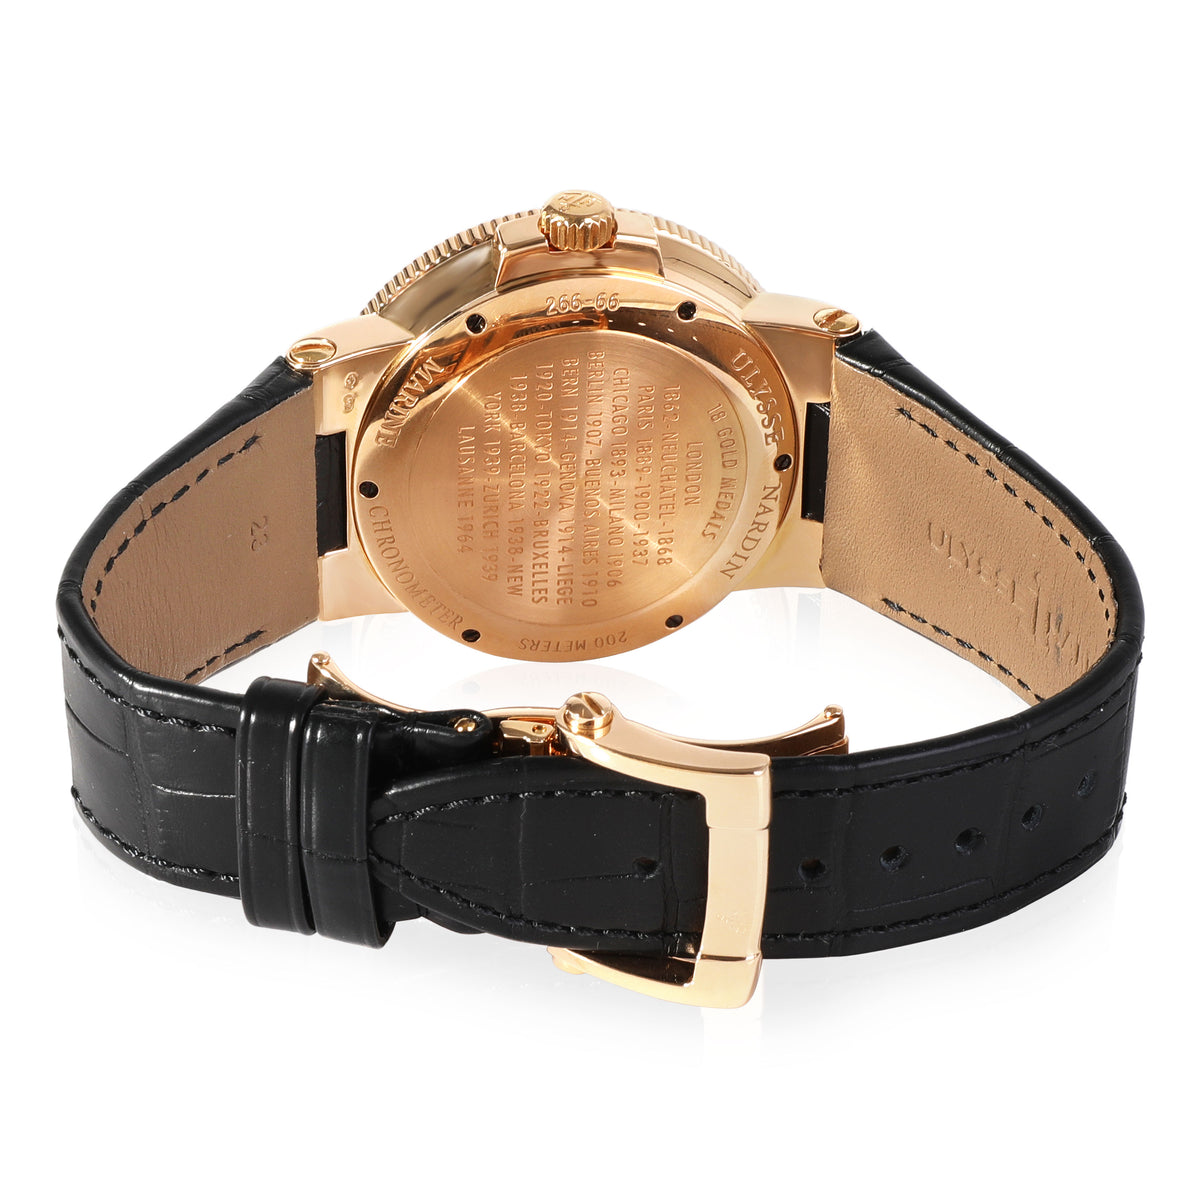 Ulysse Nardin Maxi Marine Chronometer 266-66 Men's Watch in 18kt Yellow Gold